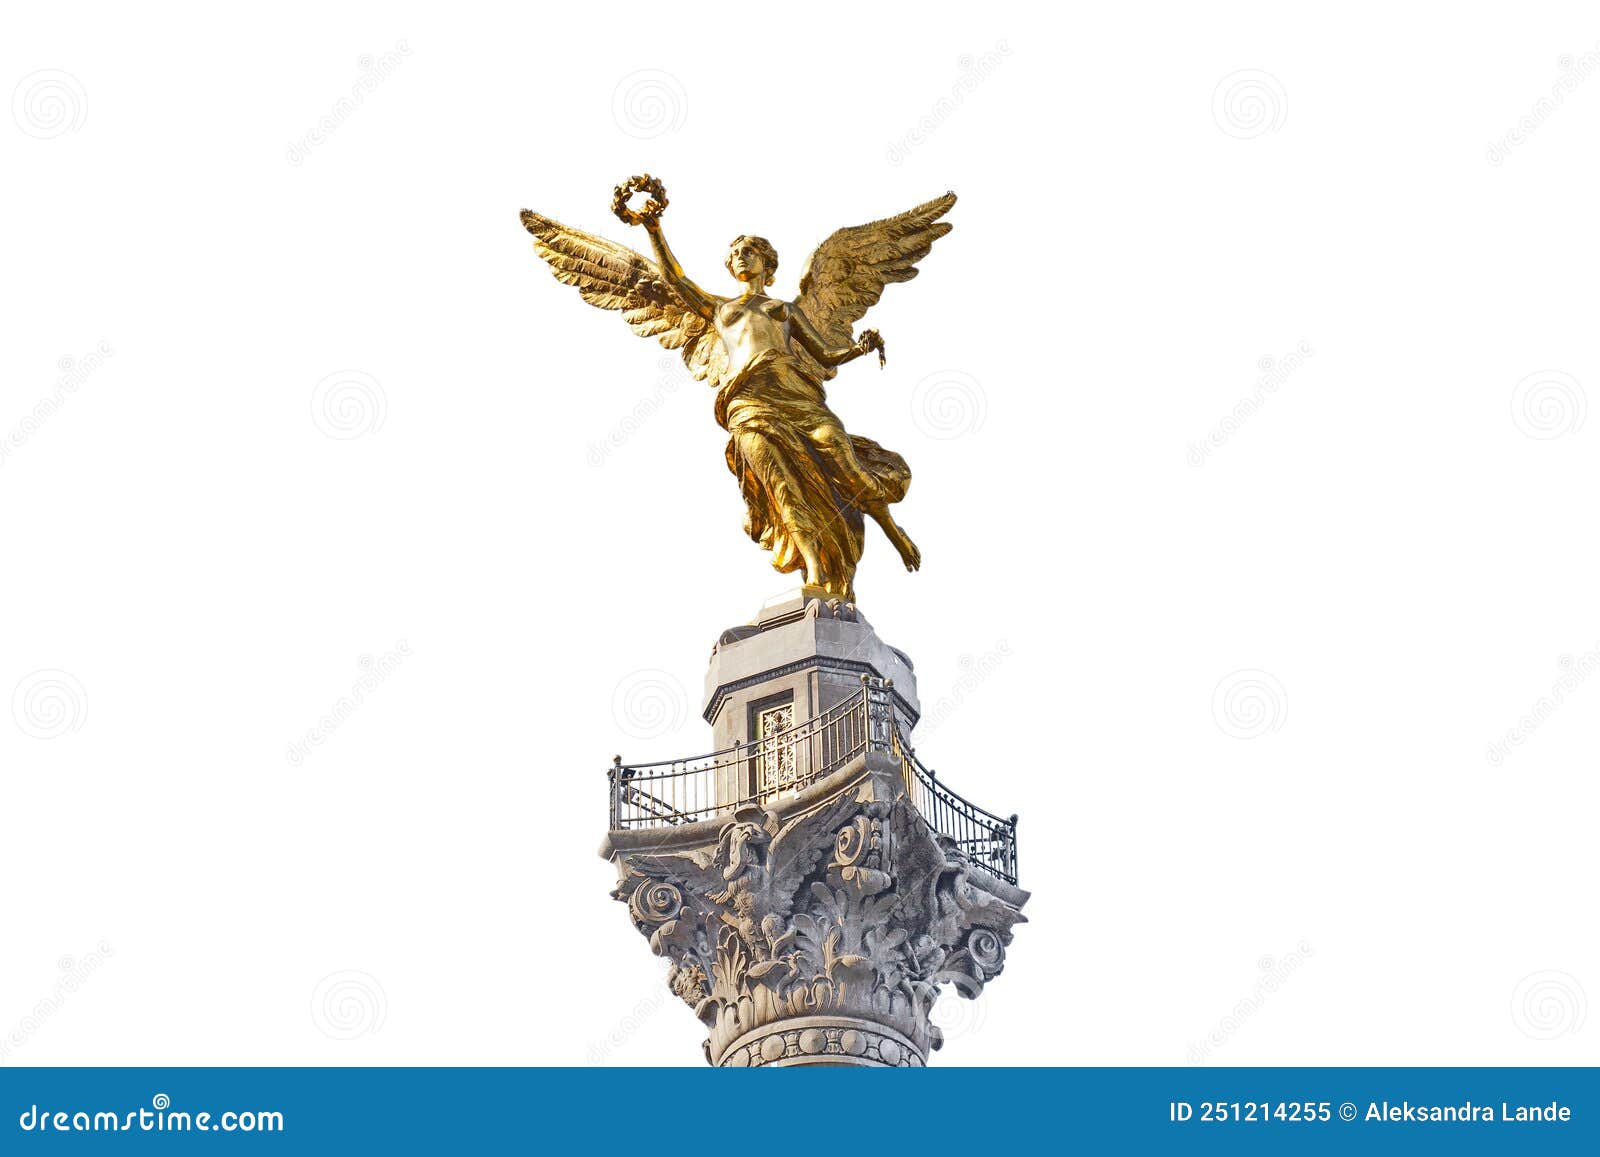 independence angel statue located in paseo de la reforma avenue